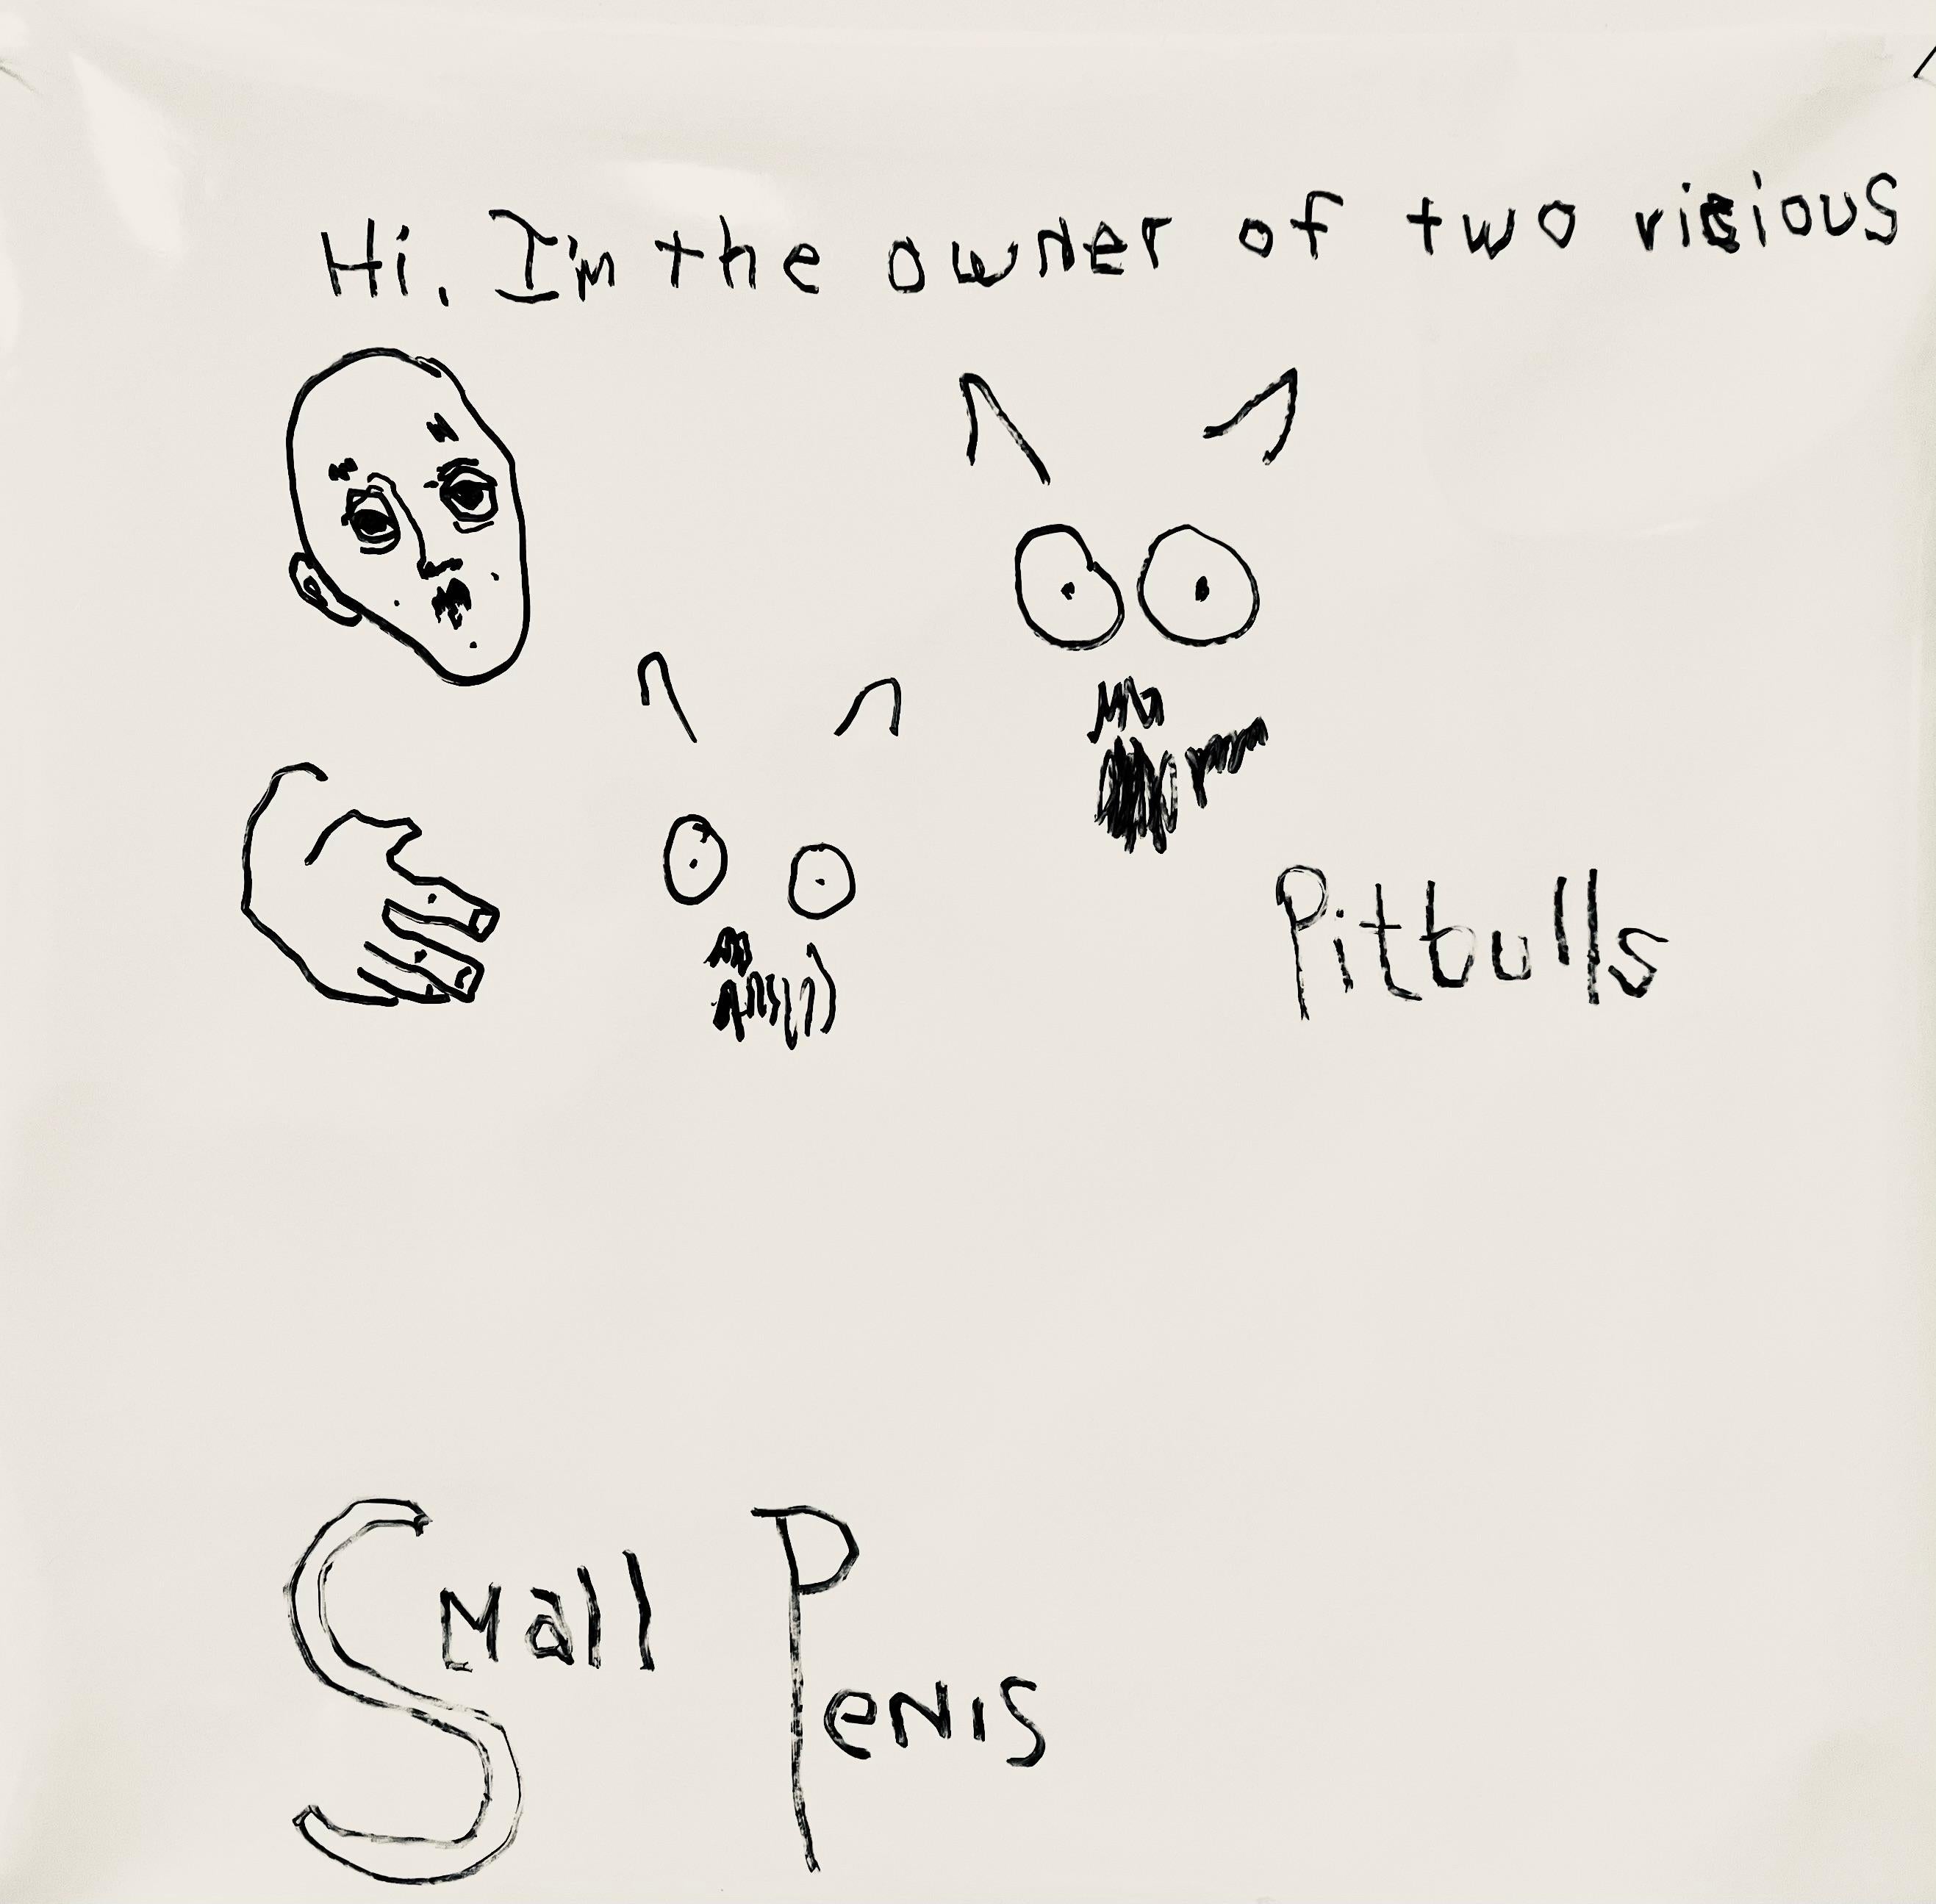 C. Dimitri Abstract Painting - Pitbulls, glyphic symbols text includes "pitbull" "small penis" dog theme